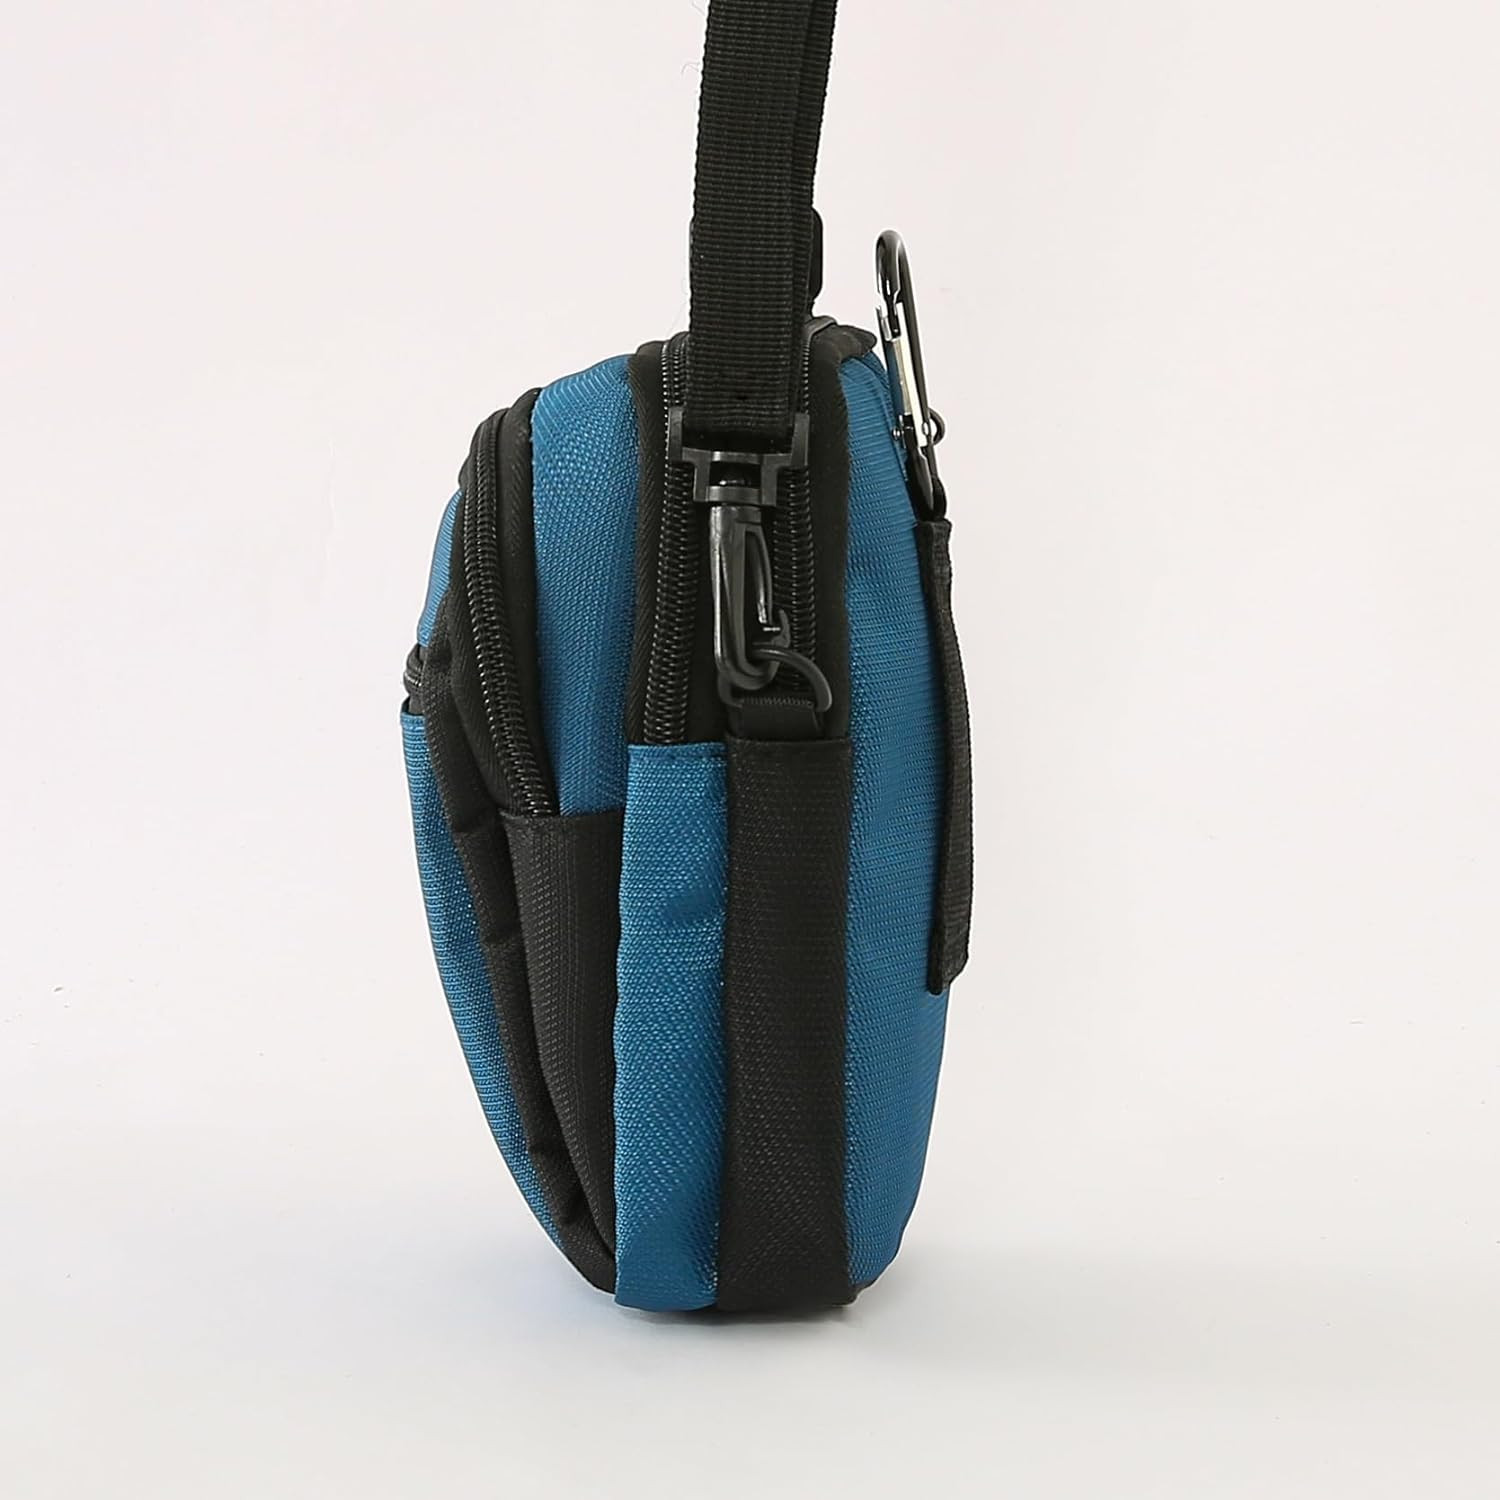 Kuber Industries Paspport Holder for Men & Women|Multifunction Passport Cover Bag|Nylon Passport Pouch for Luggage (Blue)